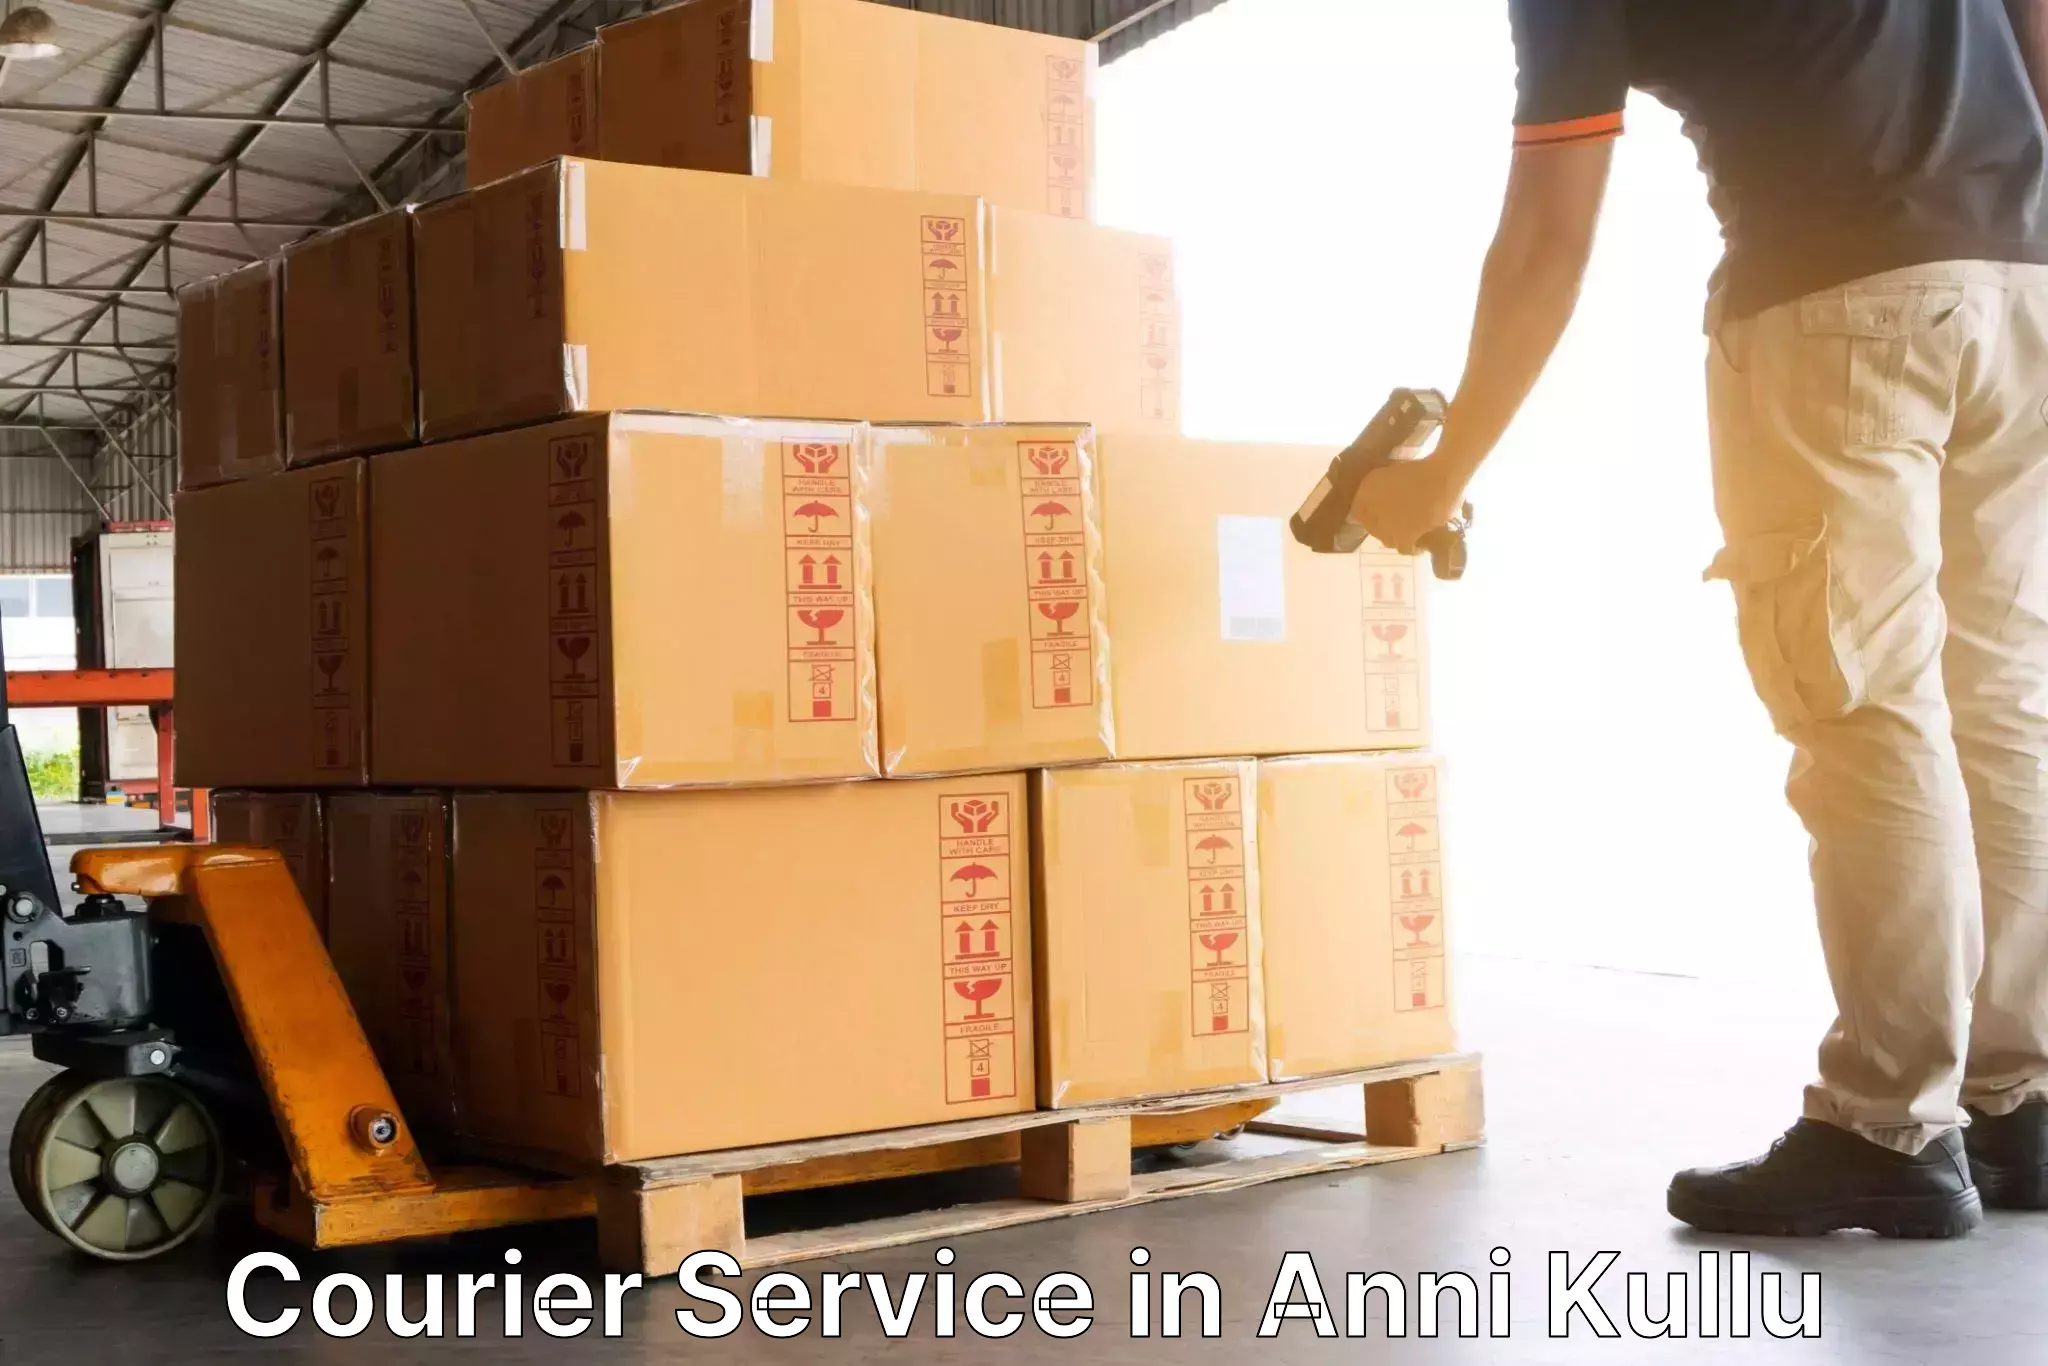 Courier service efficiency in Anni Kullu